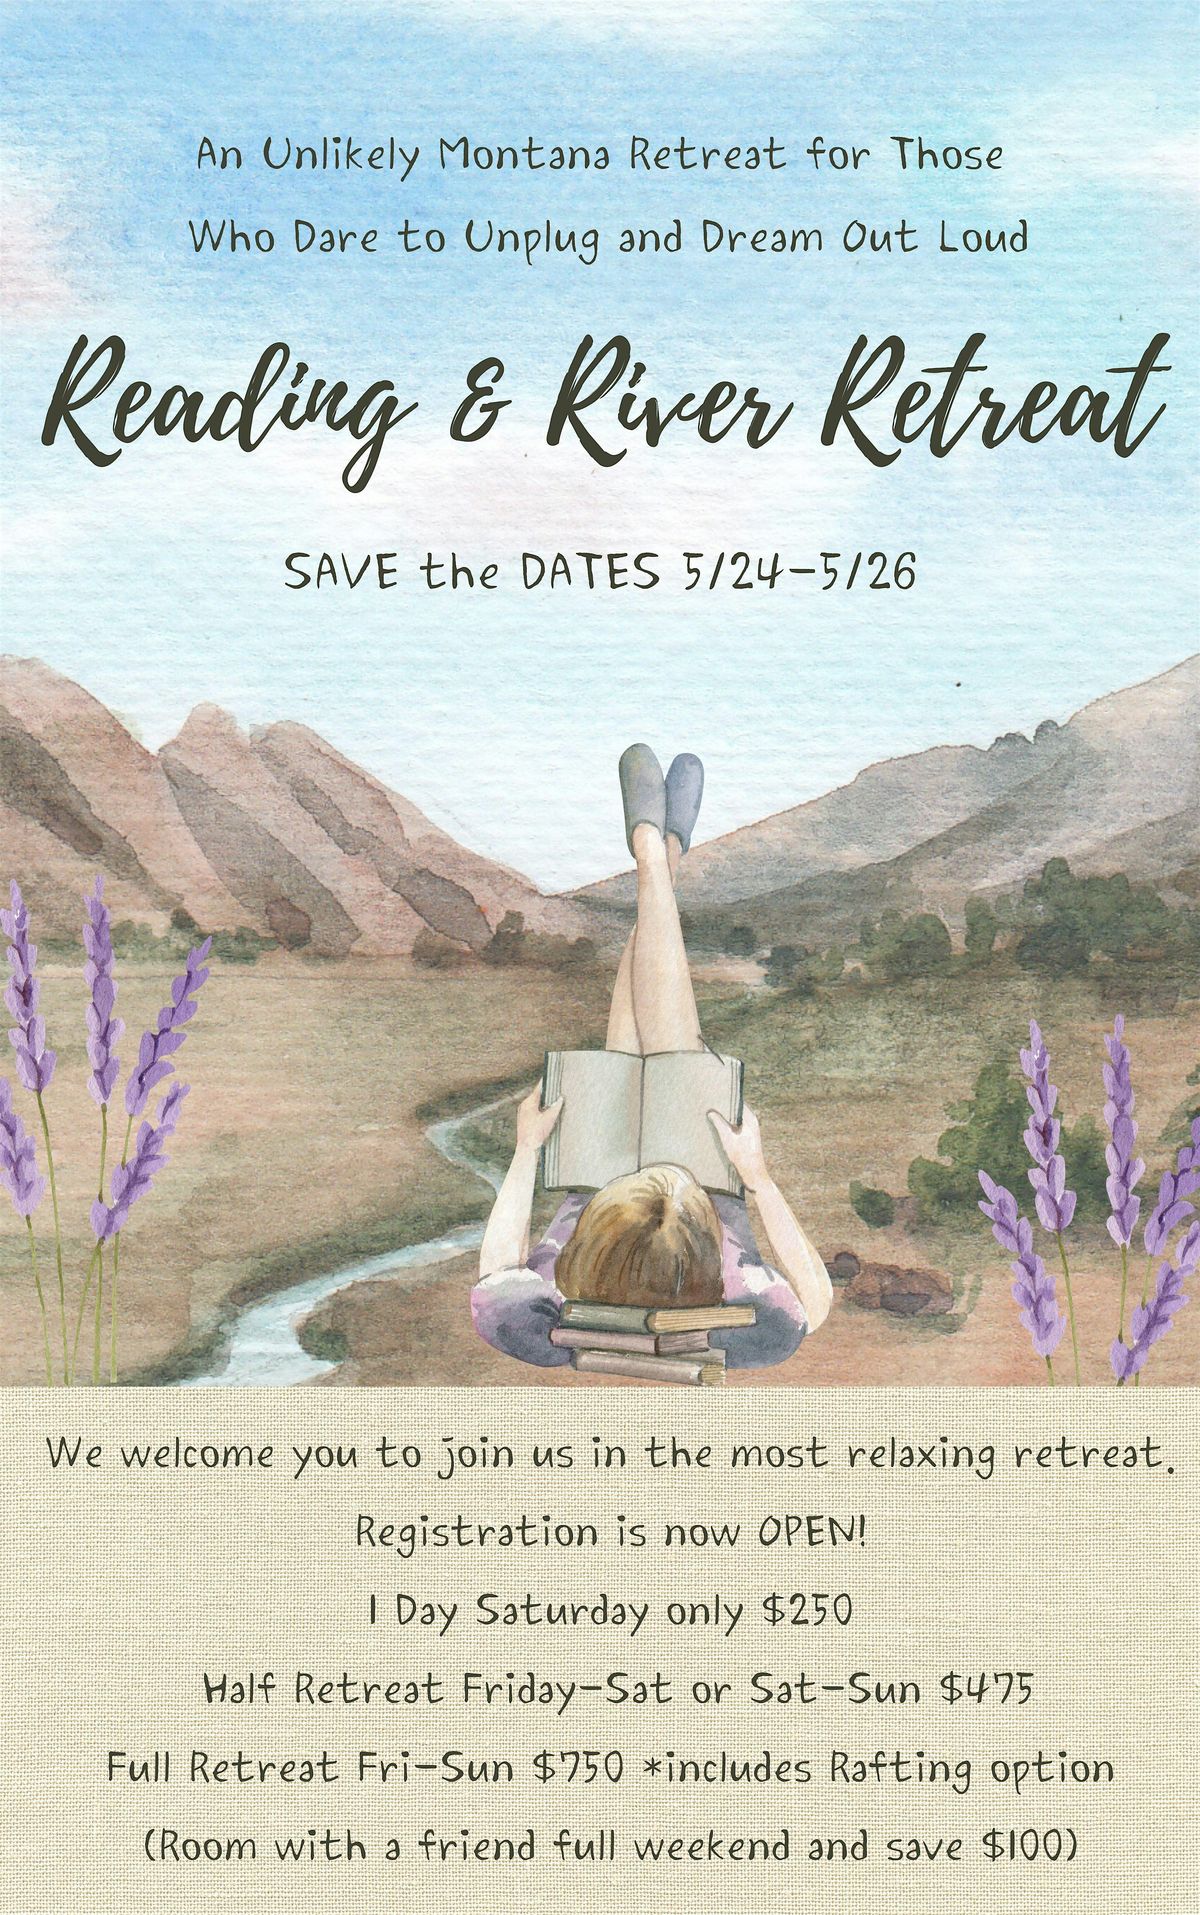 Reading & River Retreat